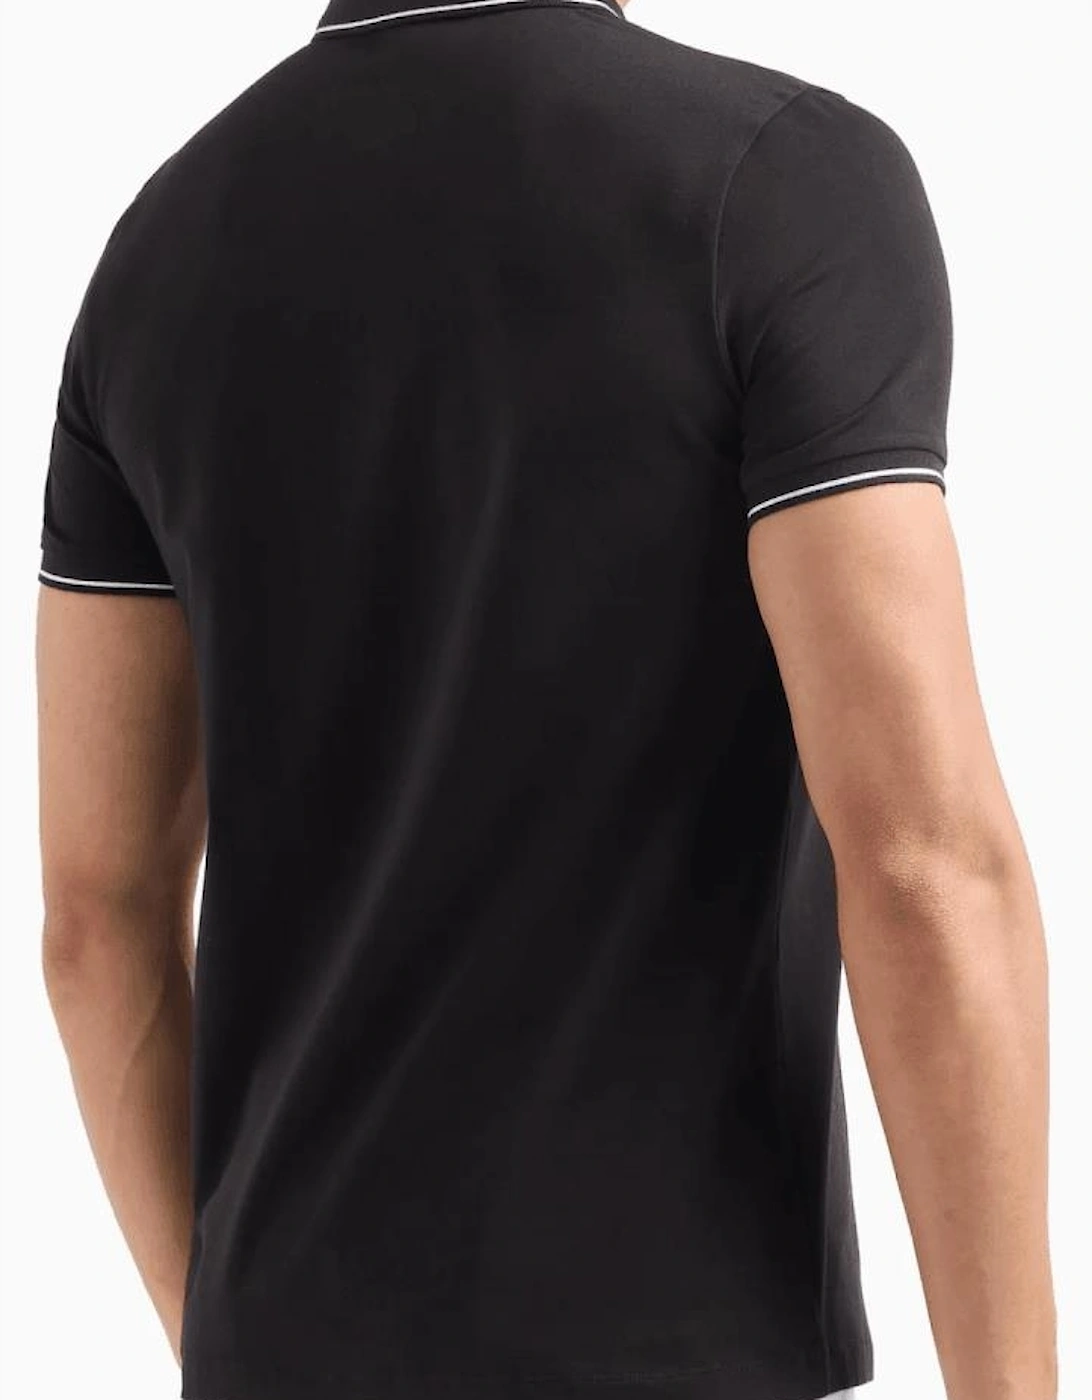 Cotton Printed Logo Black Polo Shirt